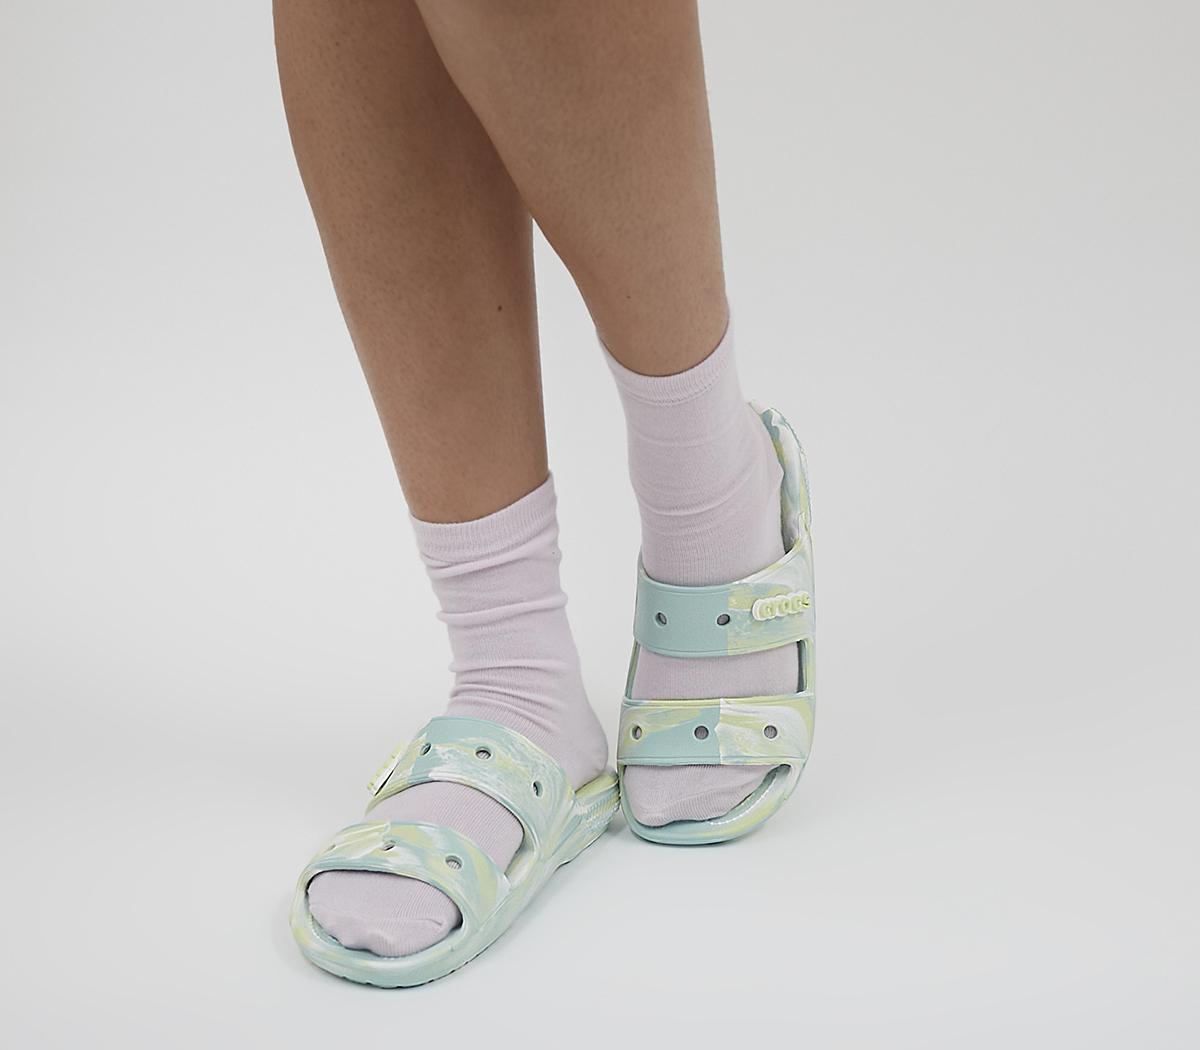 crocs Women's Isabella T-Strap Sandal : Amazon.in: Shoes & Handbags